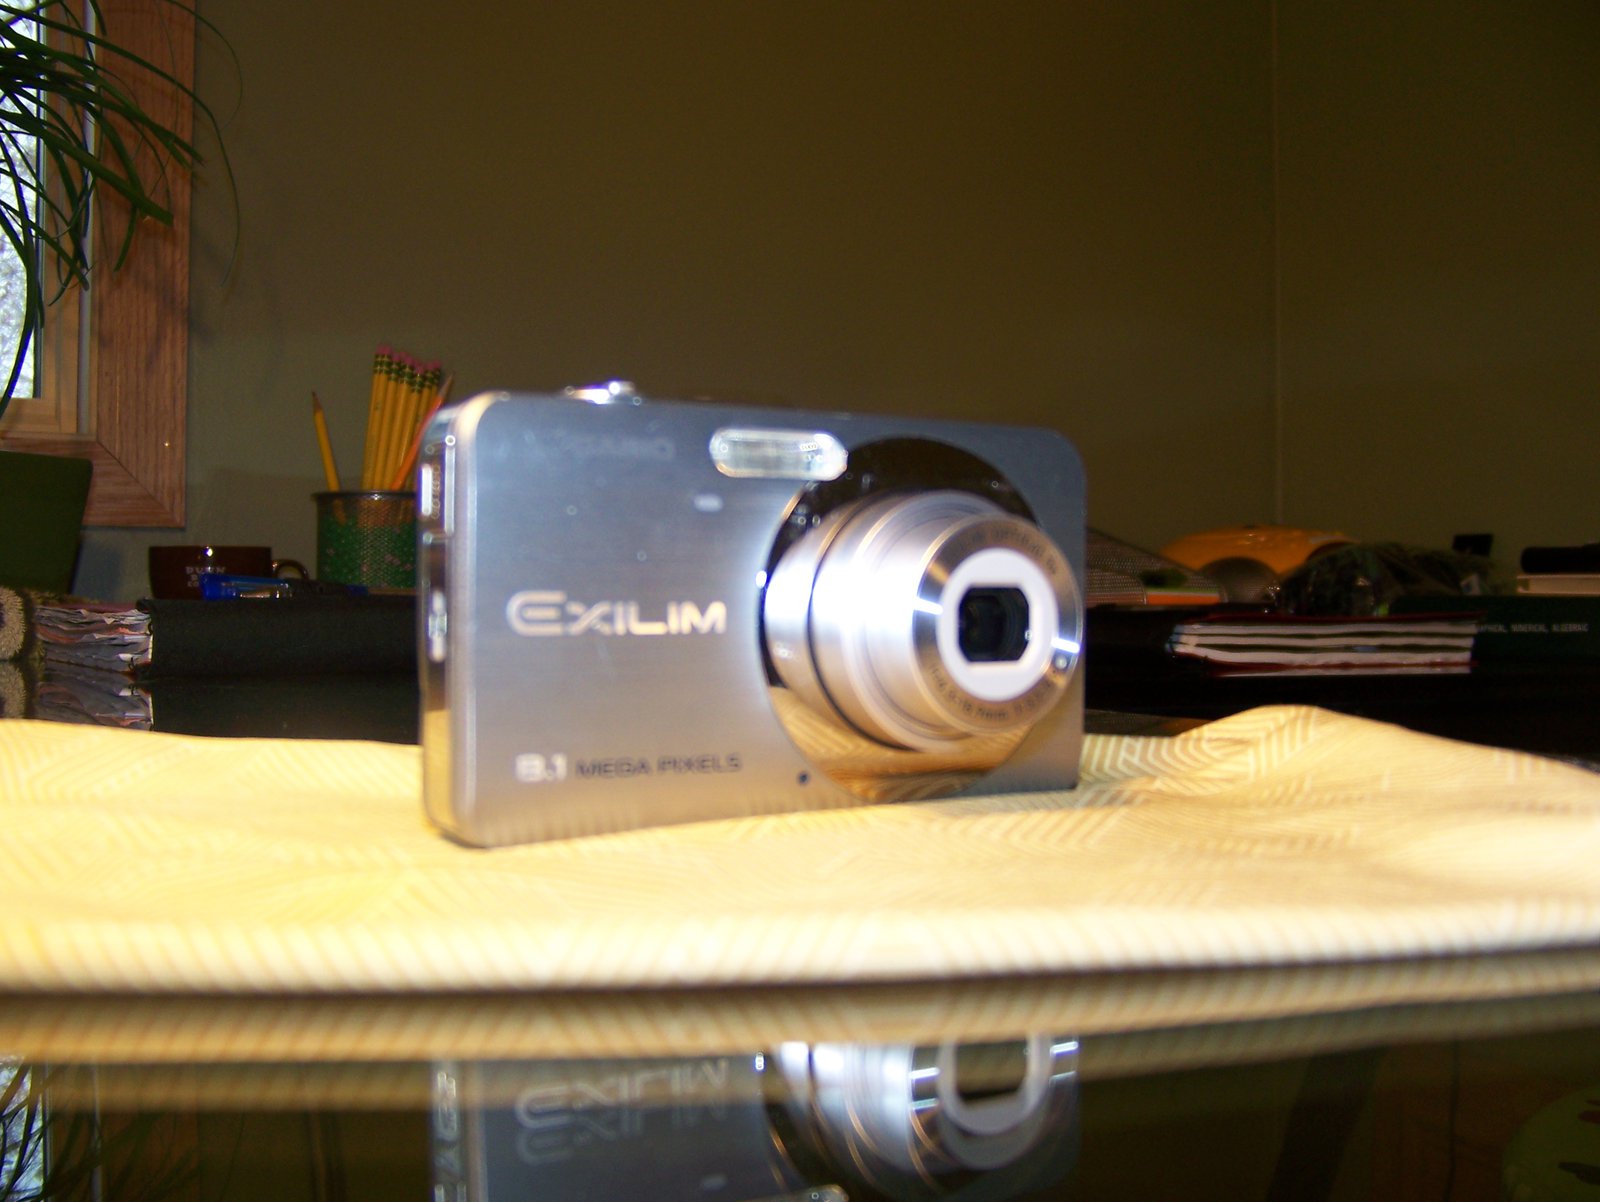 Casio Exilim 8.1 mp camera